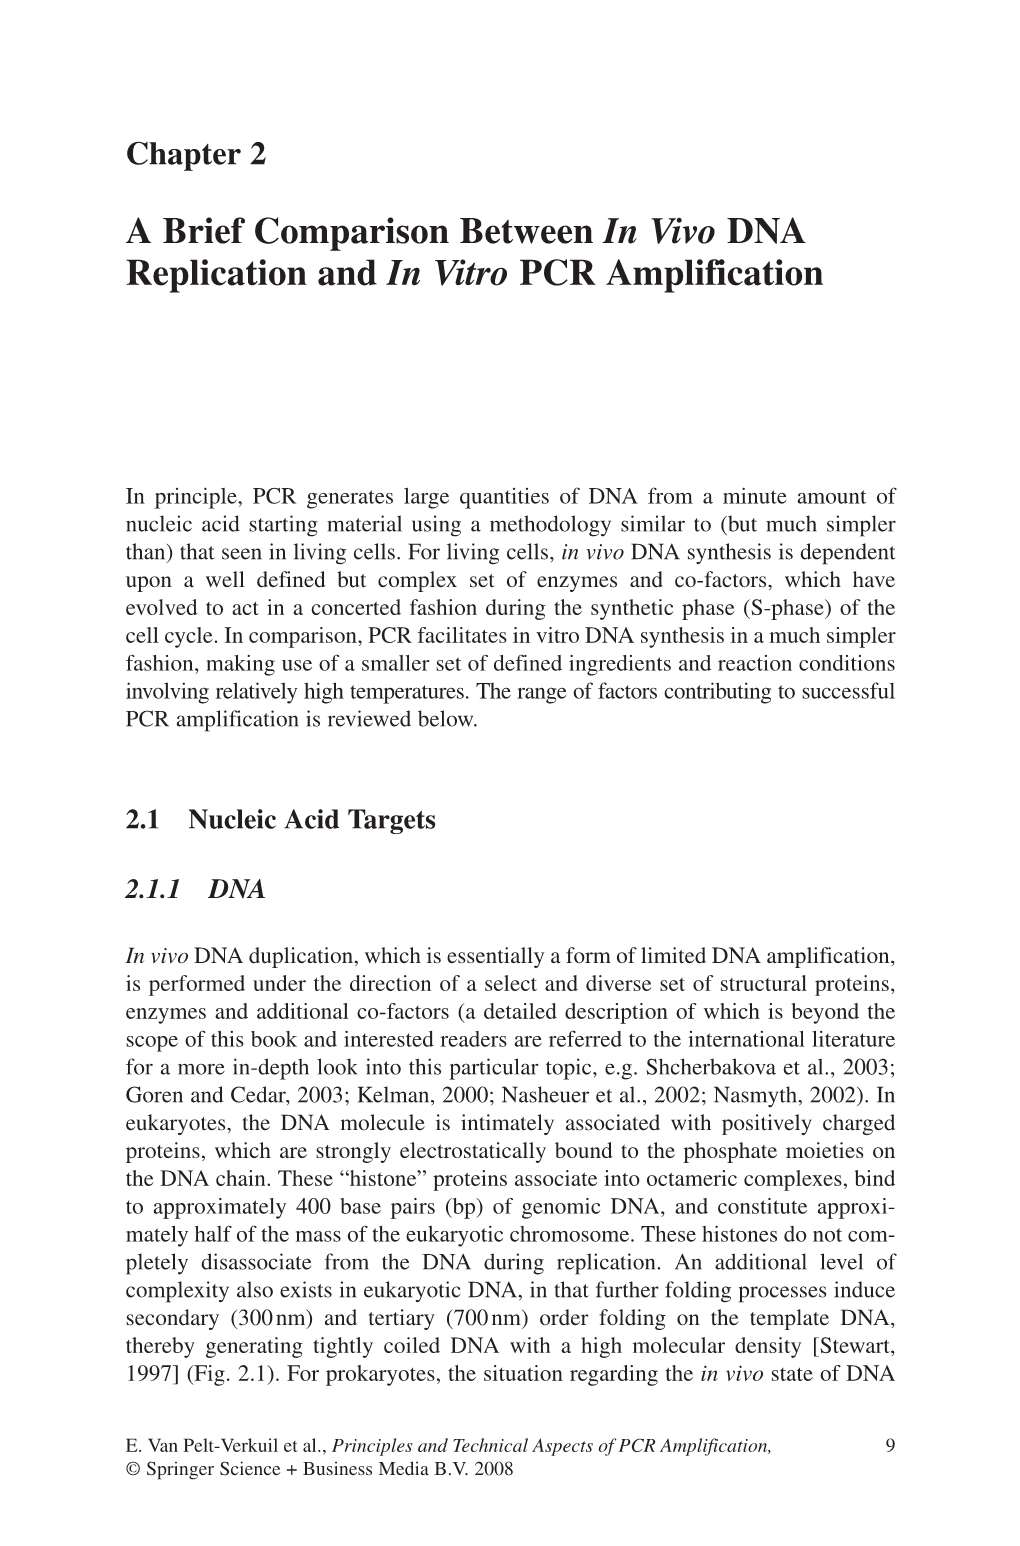 A Brief Comparison Between in Vivo DNA Replication and in Vitro PCR Amplification